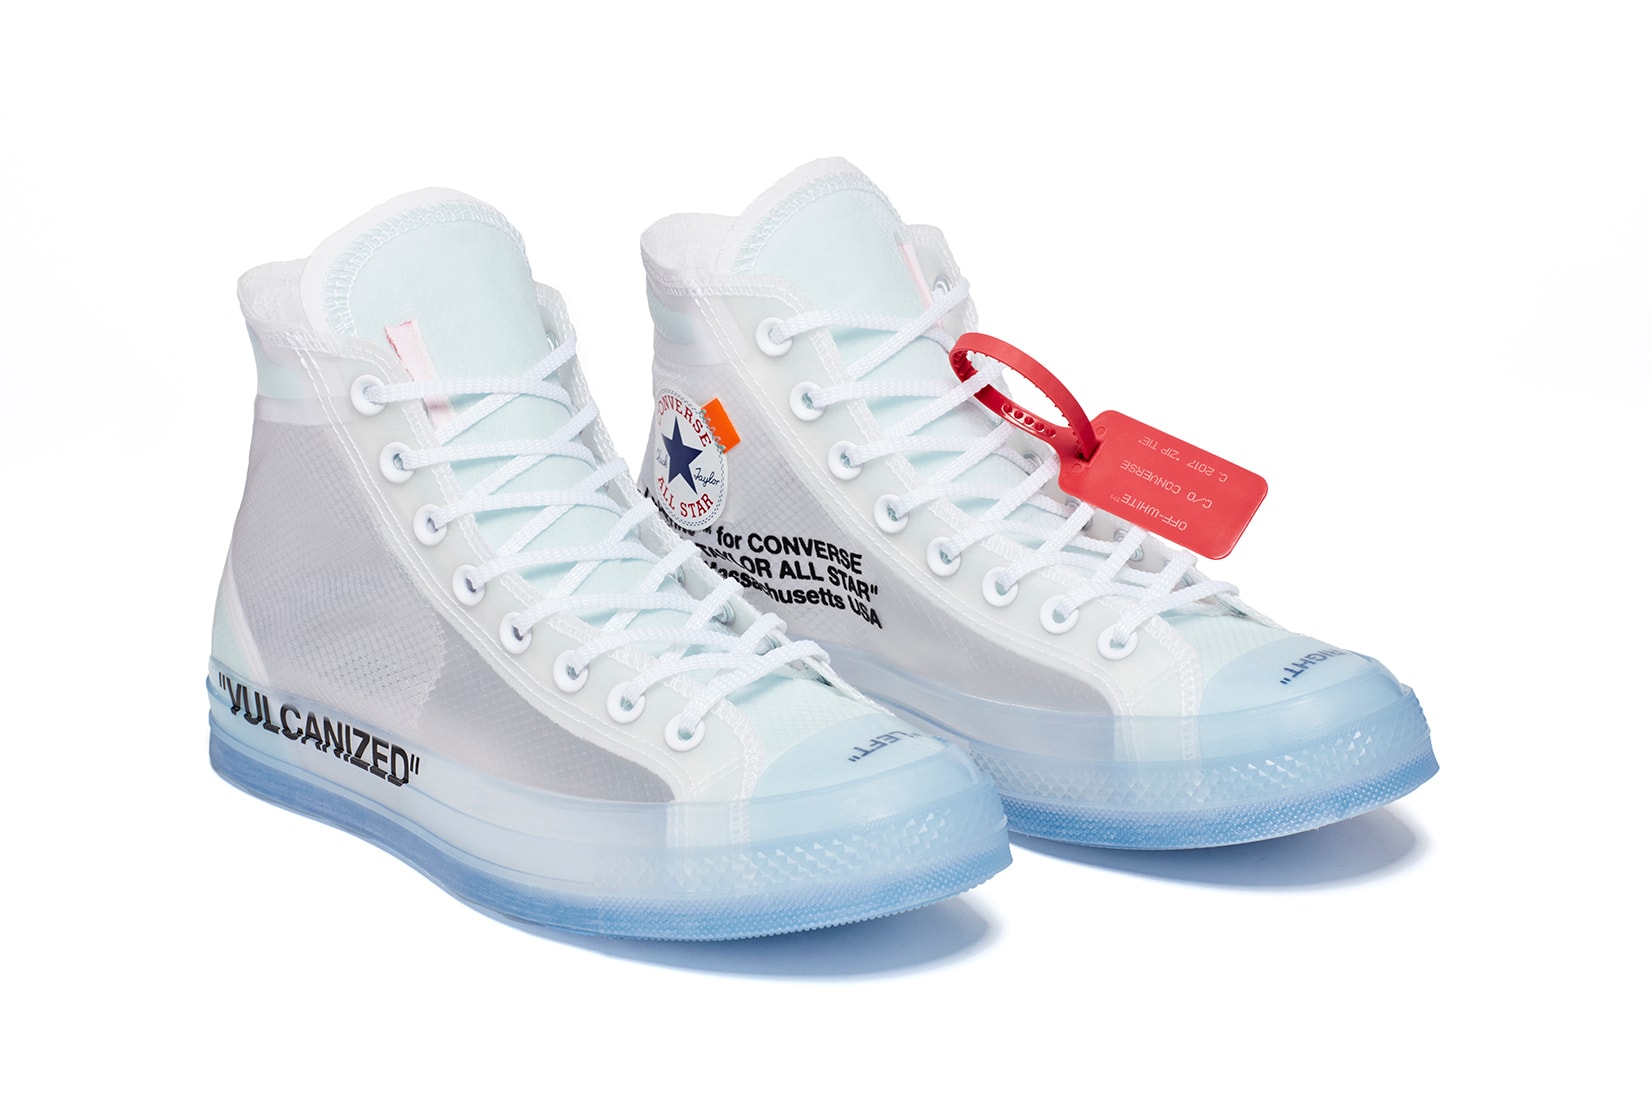 Off-White c/o Virgil Abloh Kick Off Zip-tie-tag Sneakers in White